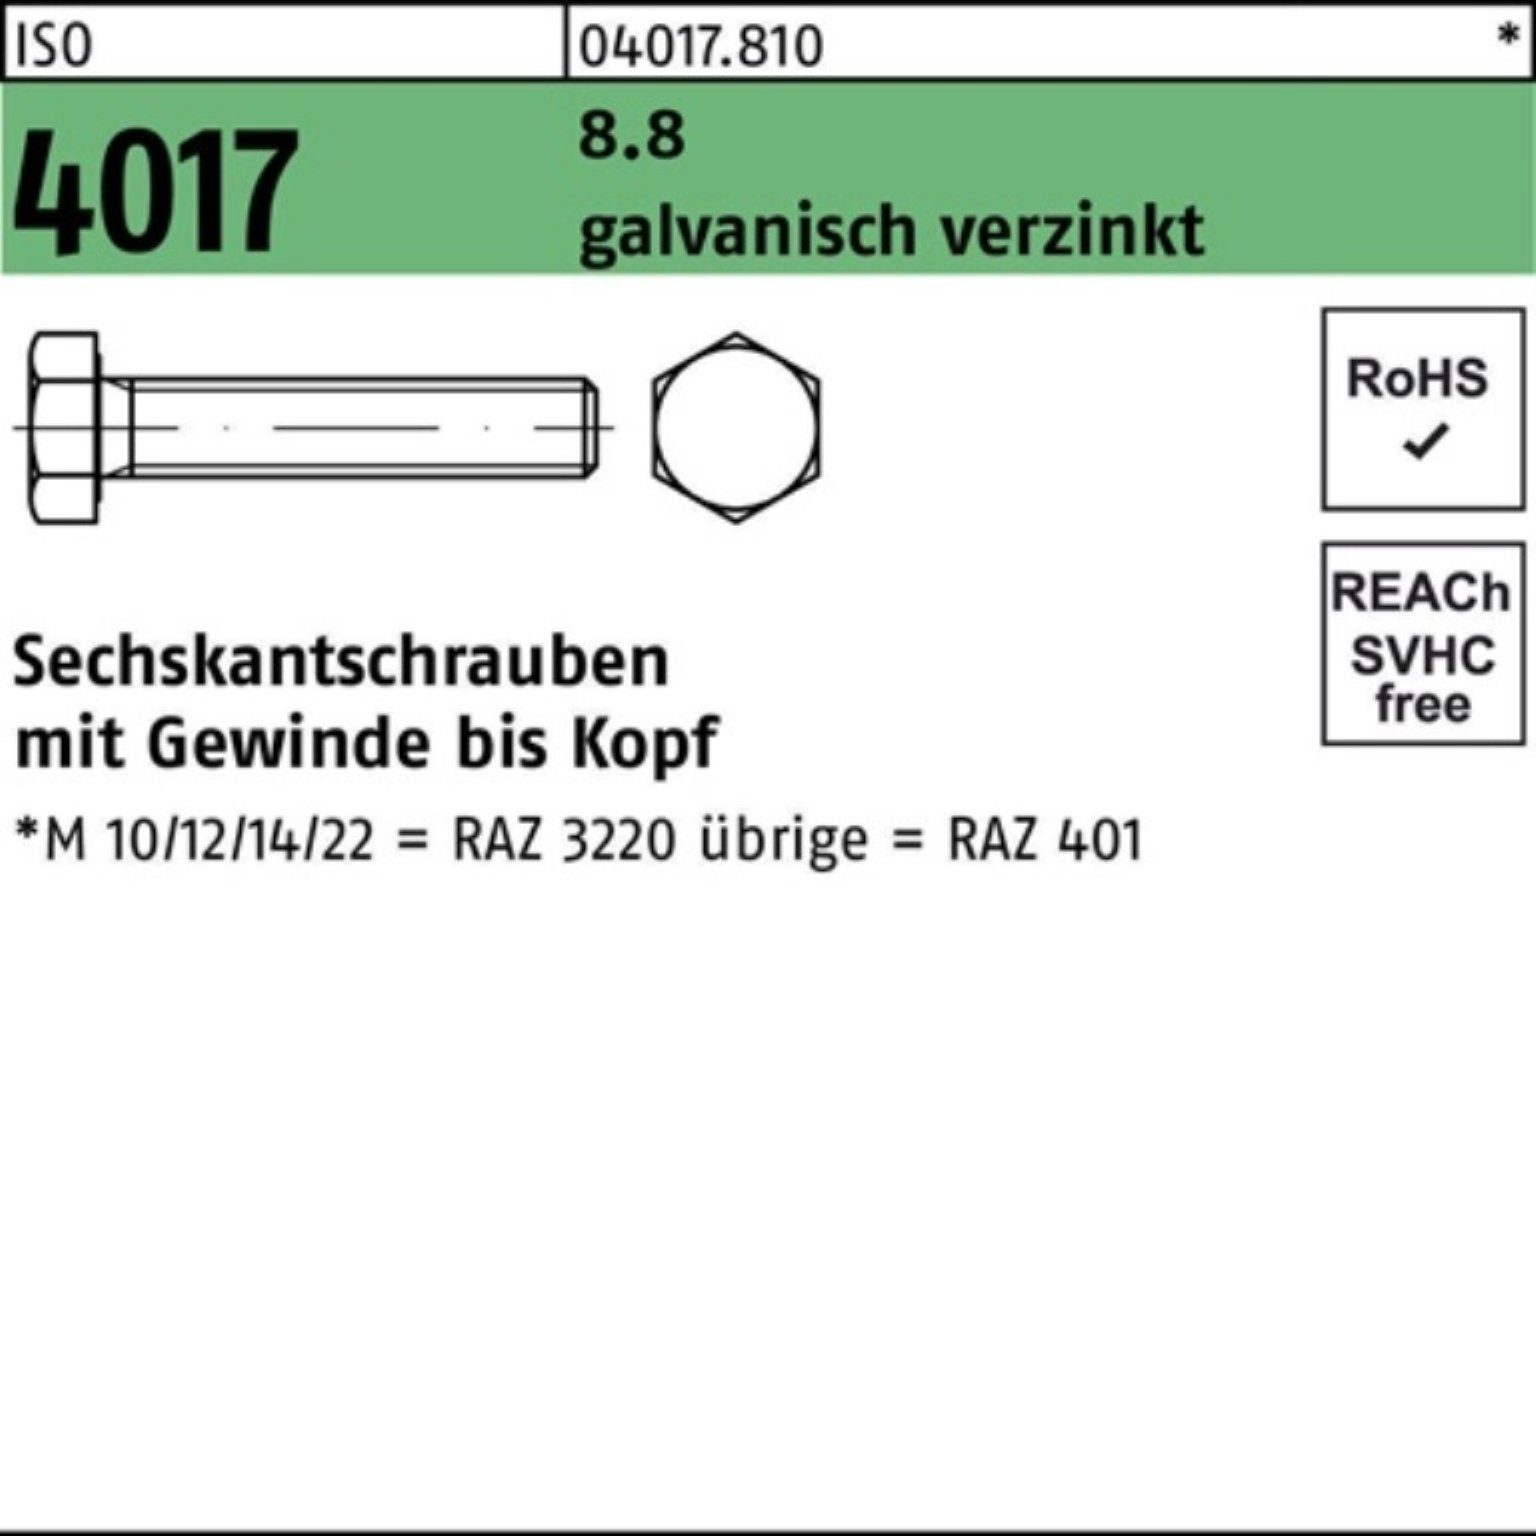 ISO Sechskantschraube 8.8 Sechskantschraube galv.verz. Bufab 4017 25 VG 45 M20x St Pack 100er